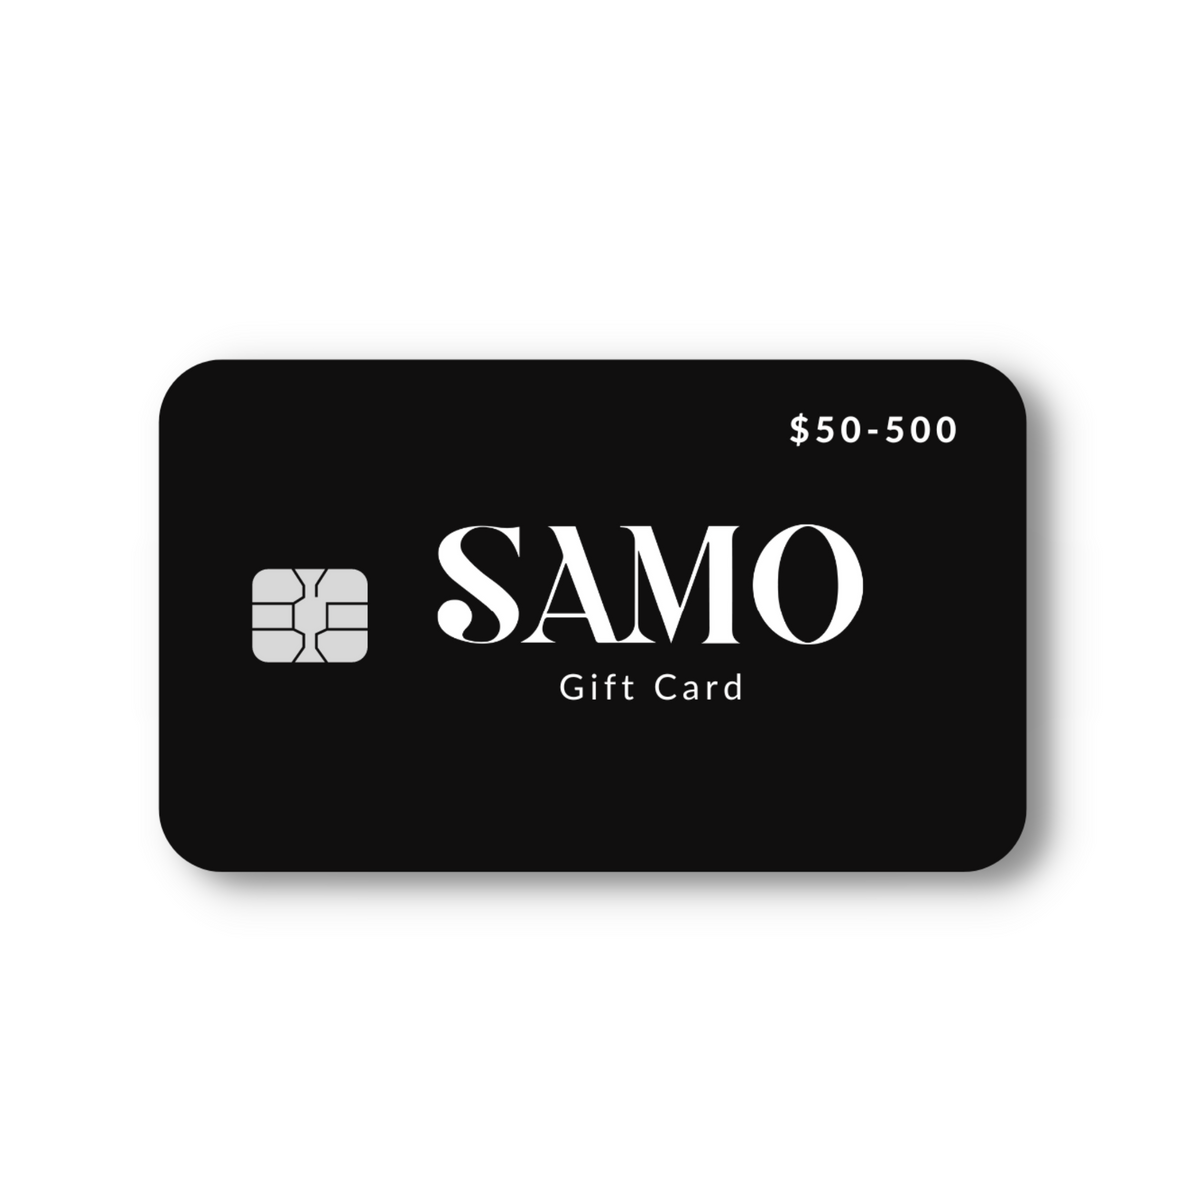 SAMO Gift Cards